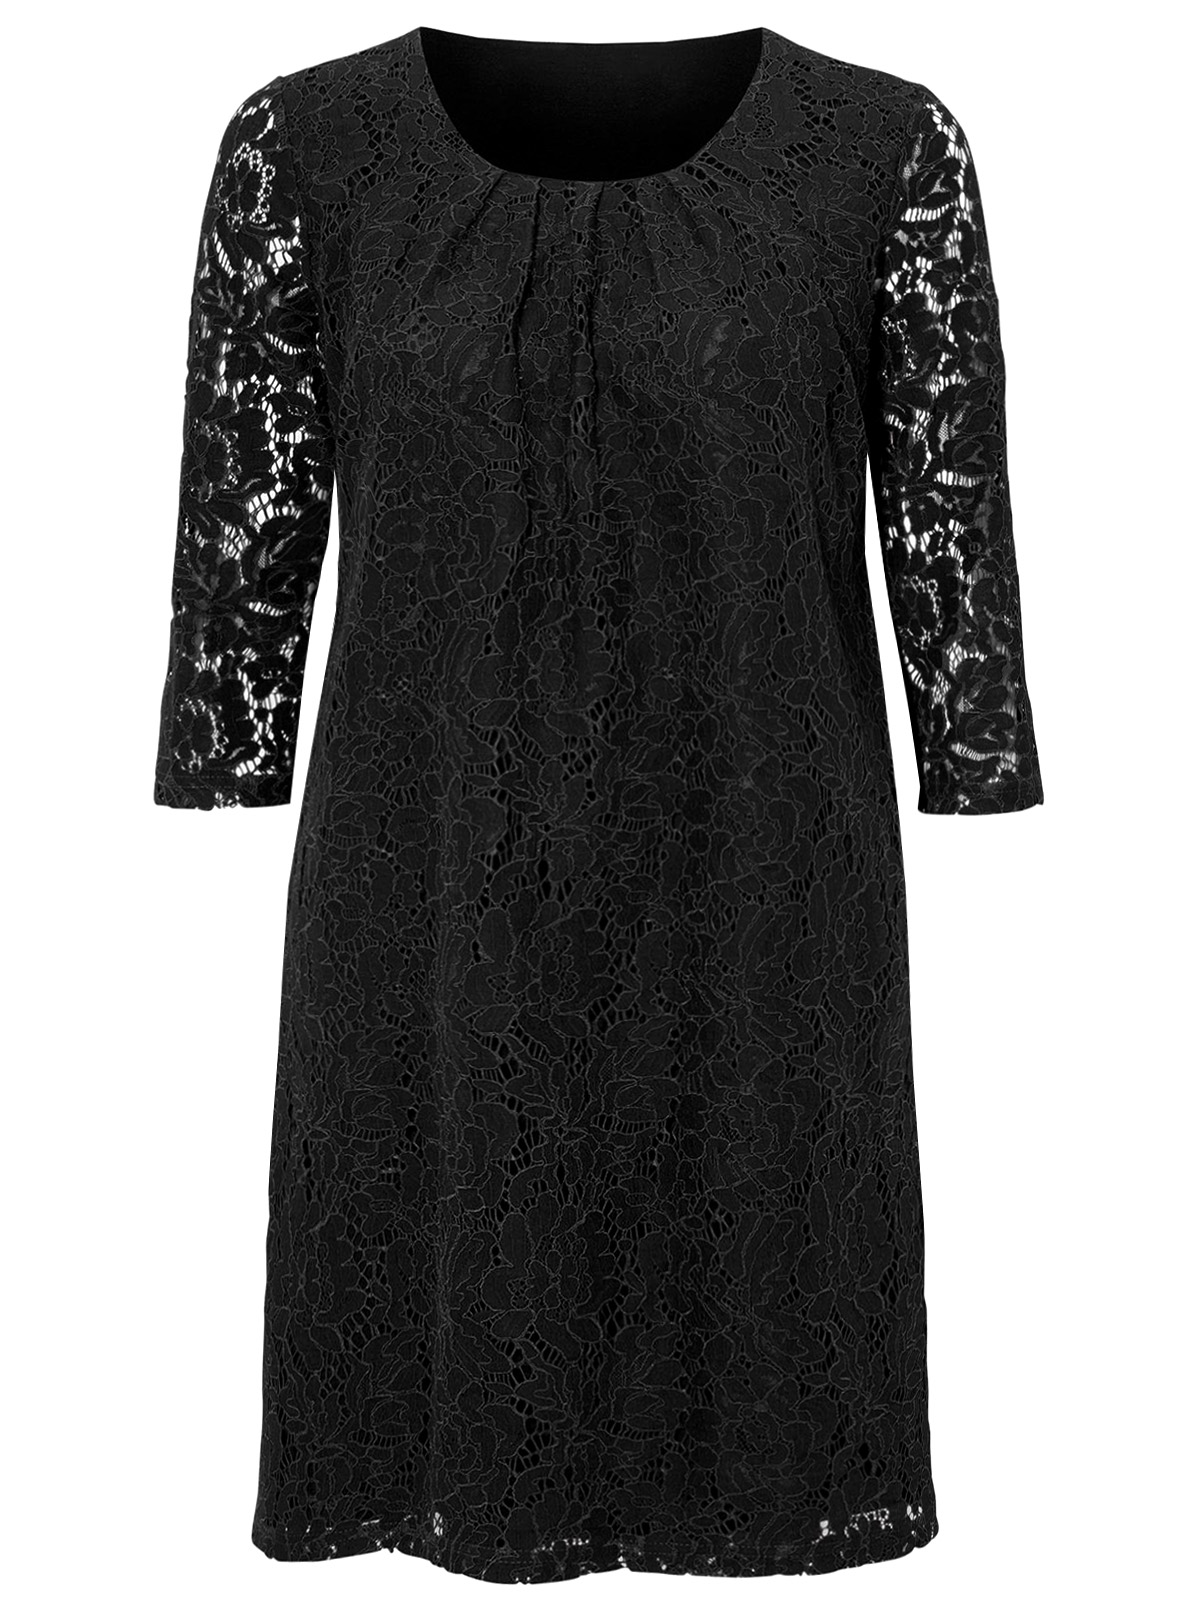 black shift dress size 22